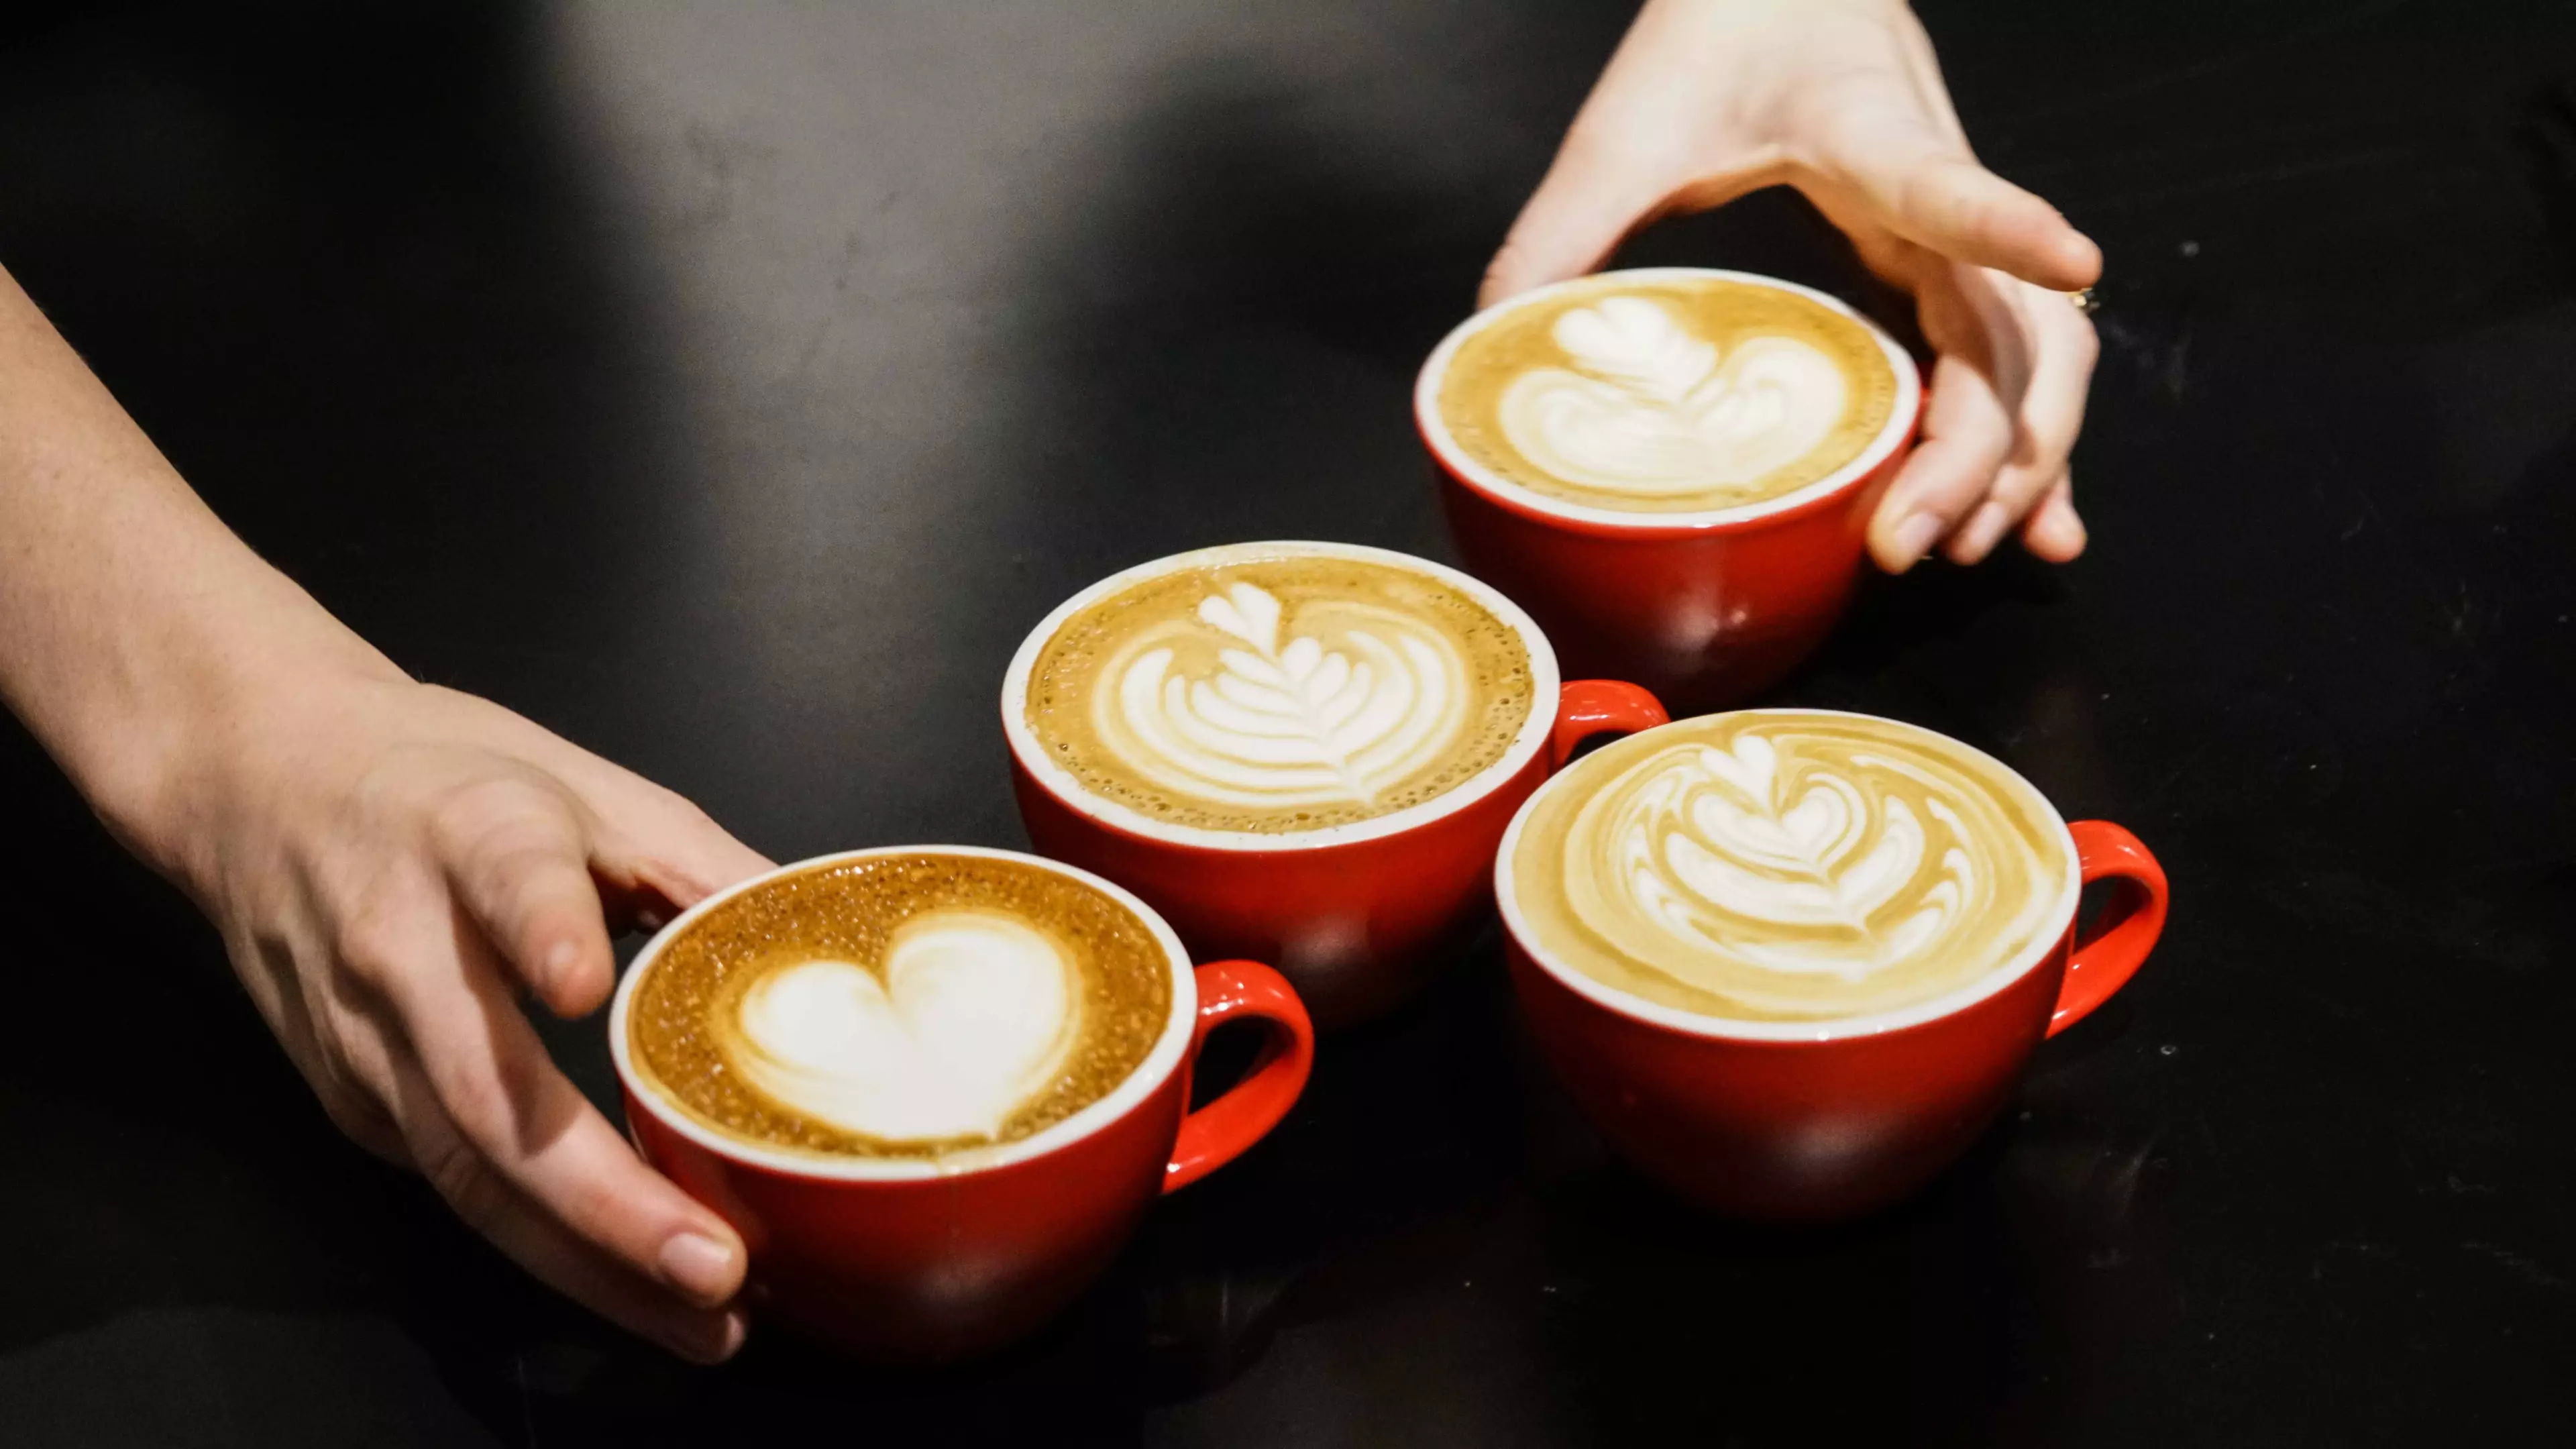 Café's Simplified 'No Nonsense' Hot Drinks Menu Sparks Debate